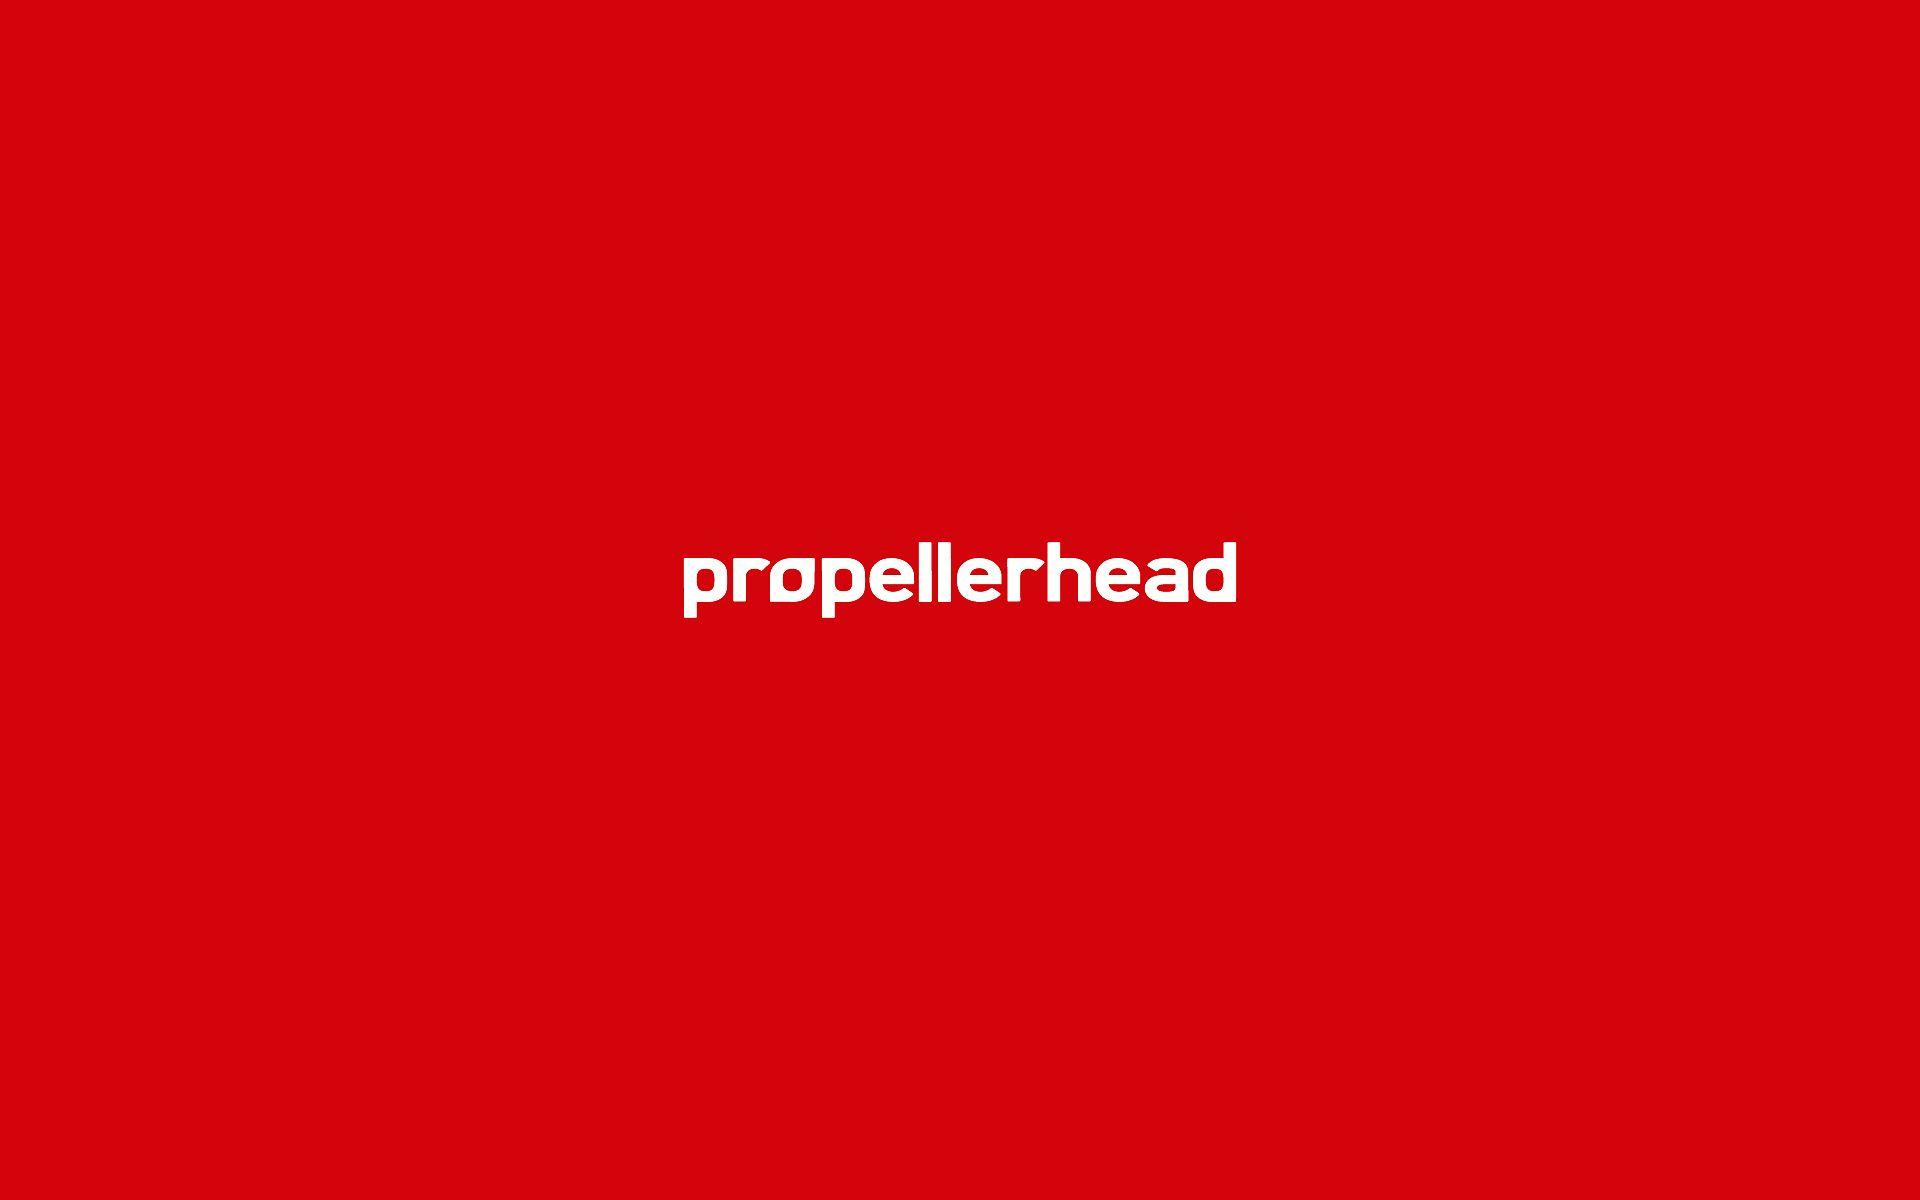 Propellerhead Wallpaper